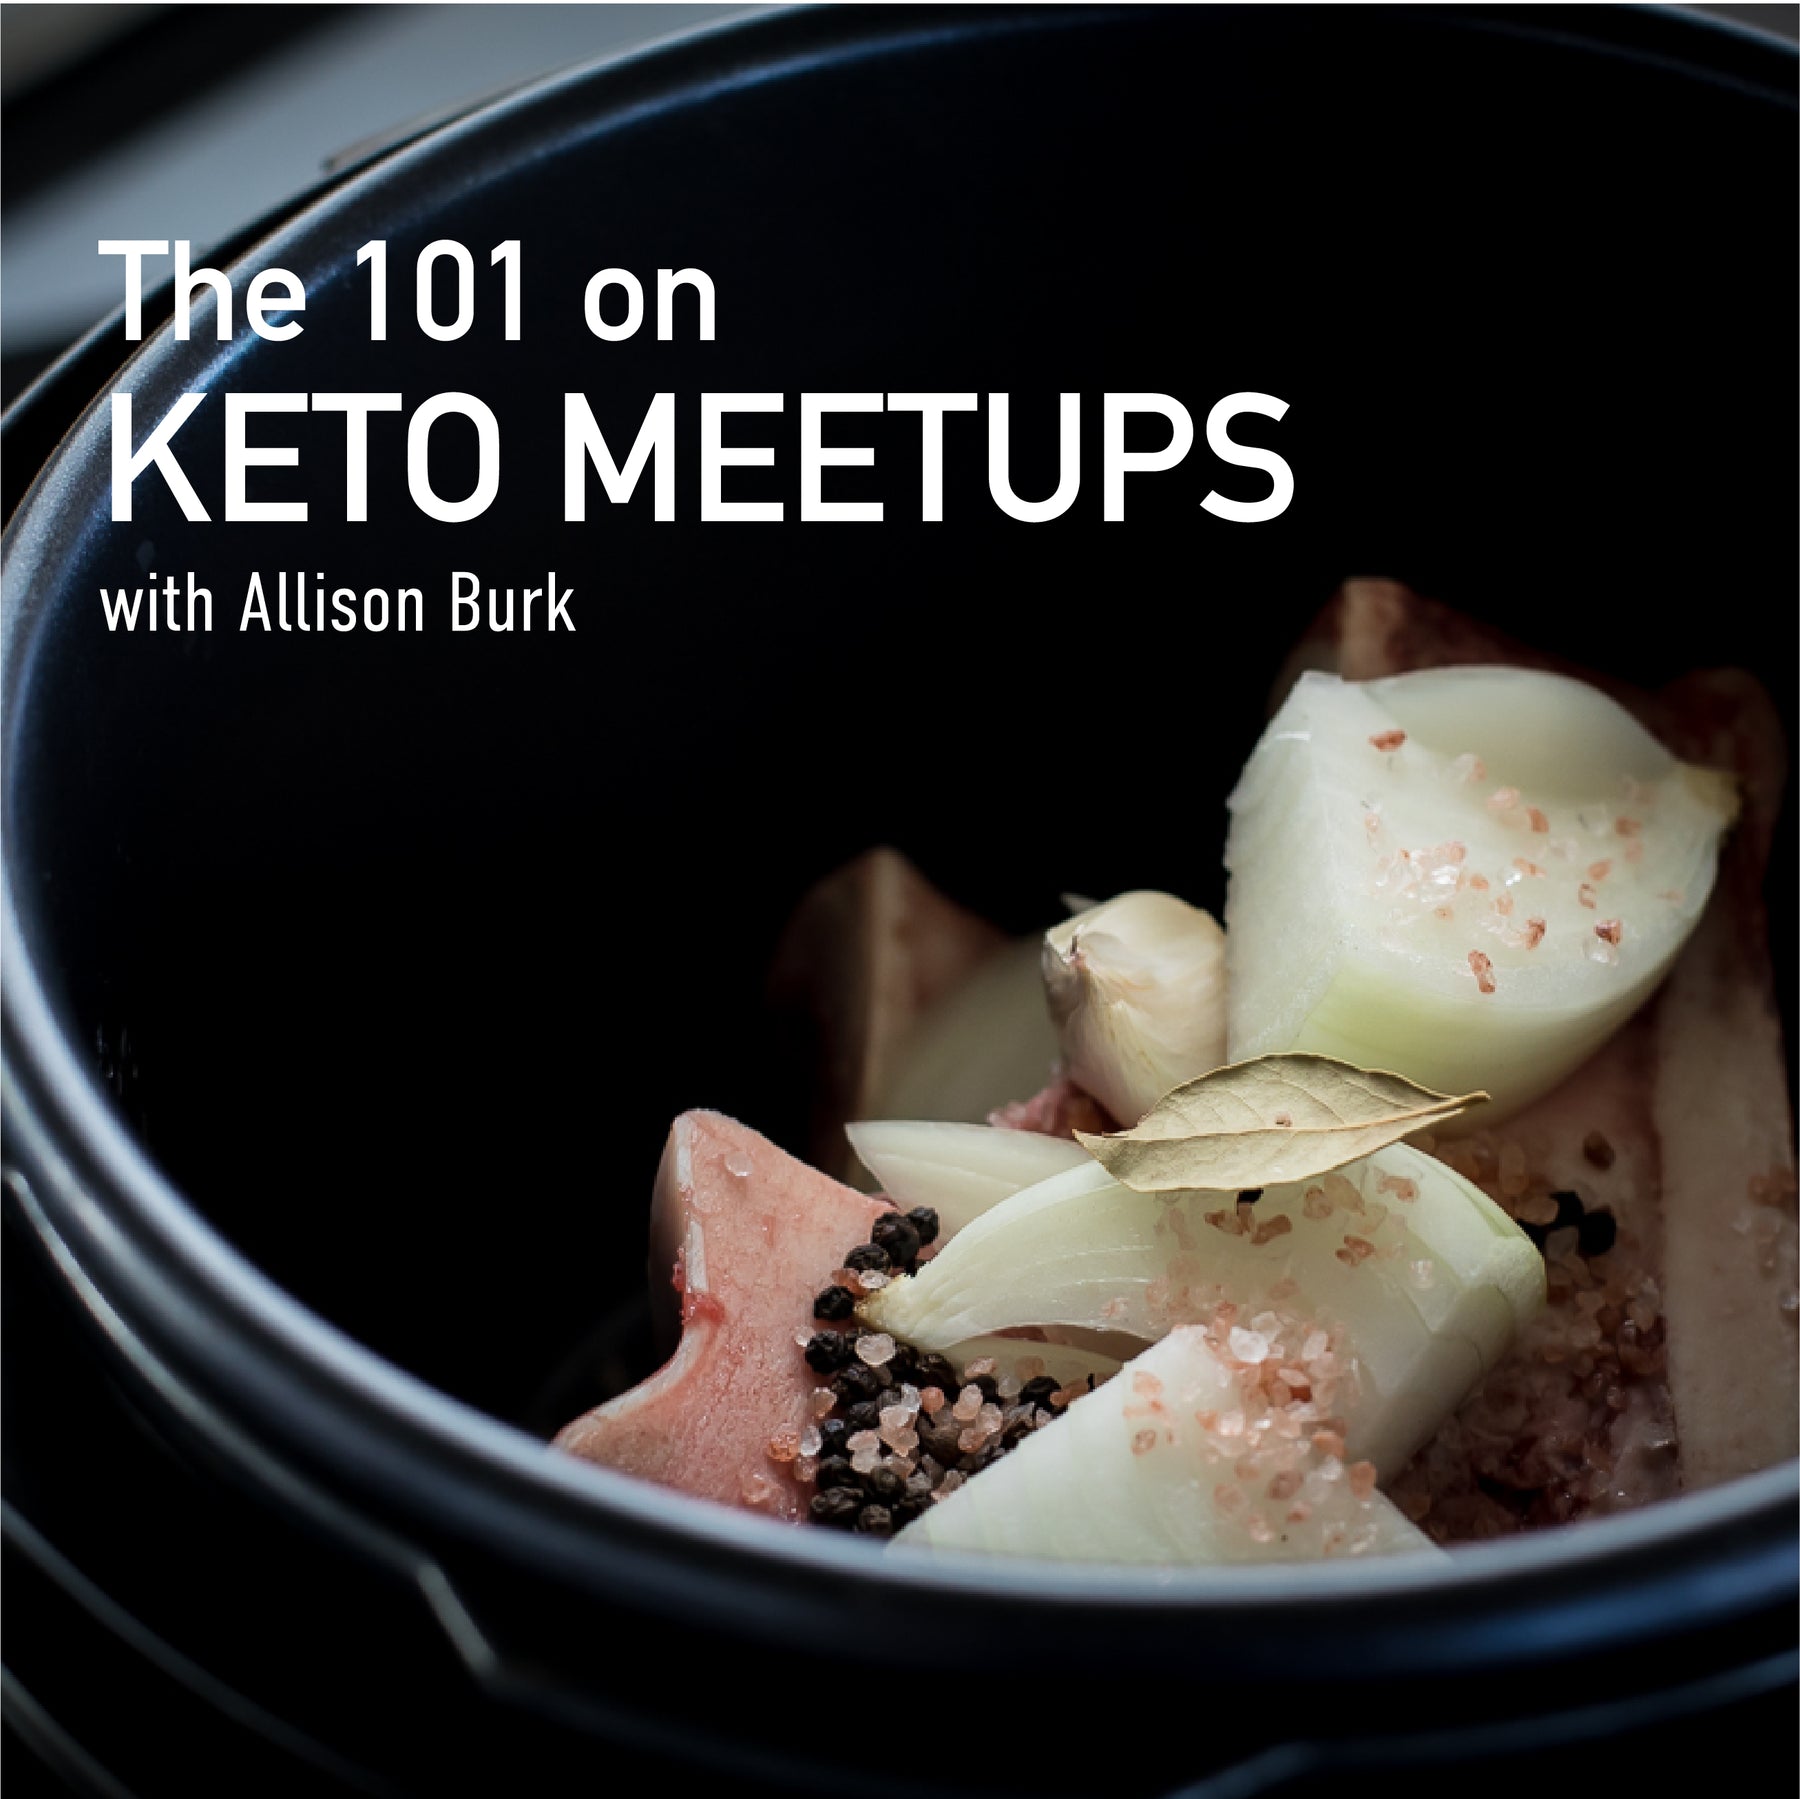 The 101 on Keto Meetups (with LonoLife customer Allison Burk)